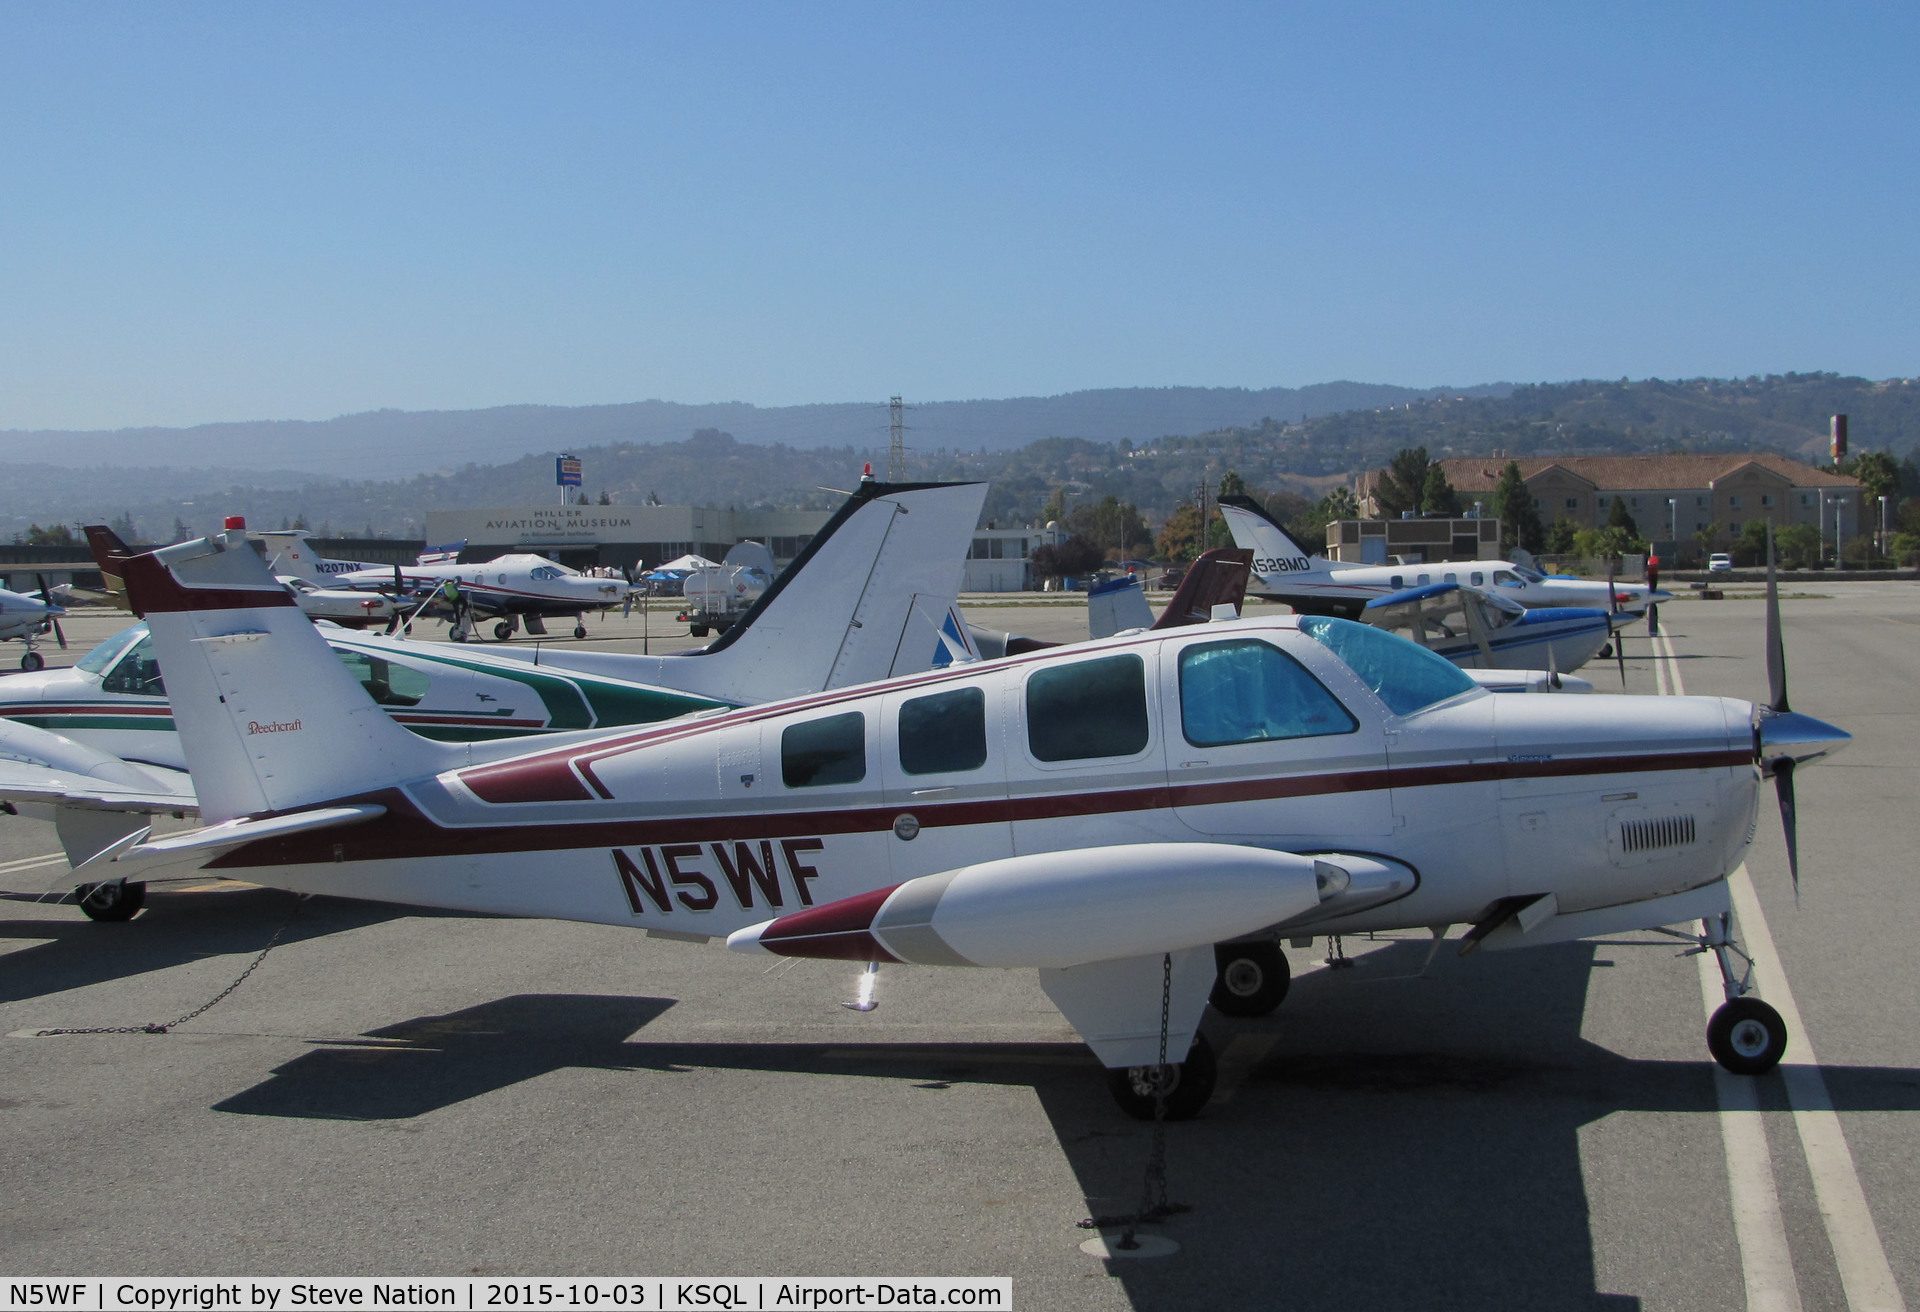 N5WF, 1994 Beech A36 Bonanza 36 C/N E-2892, Mociva Inc. (Del Mar, CA) 1994 Beech A36 parked on visitor's ramp @ San Carlos Airport, CA (did this replace Mociva's Cessna 501?)